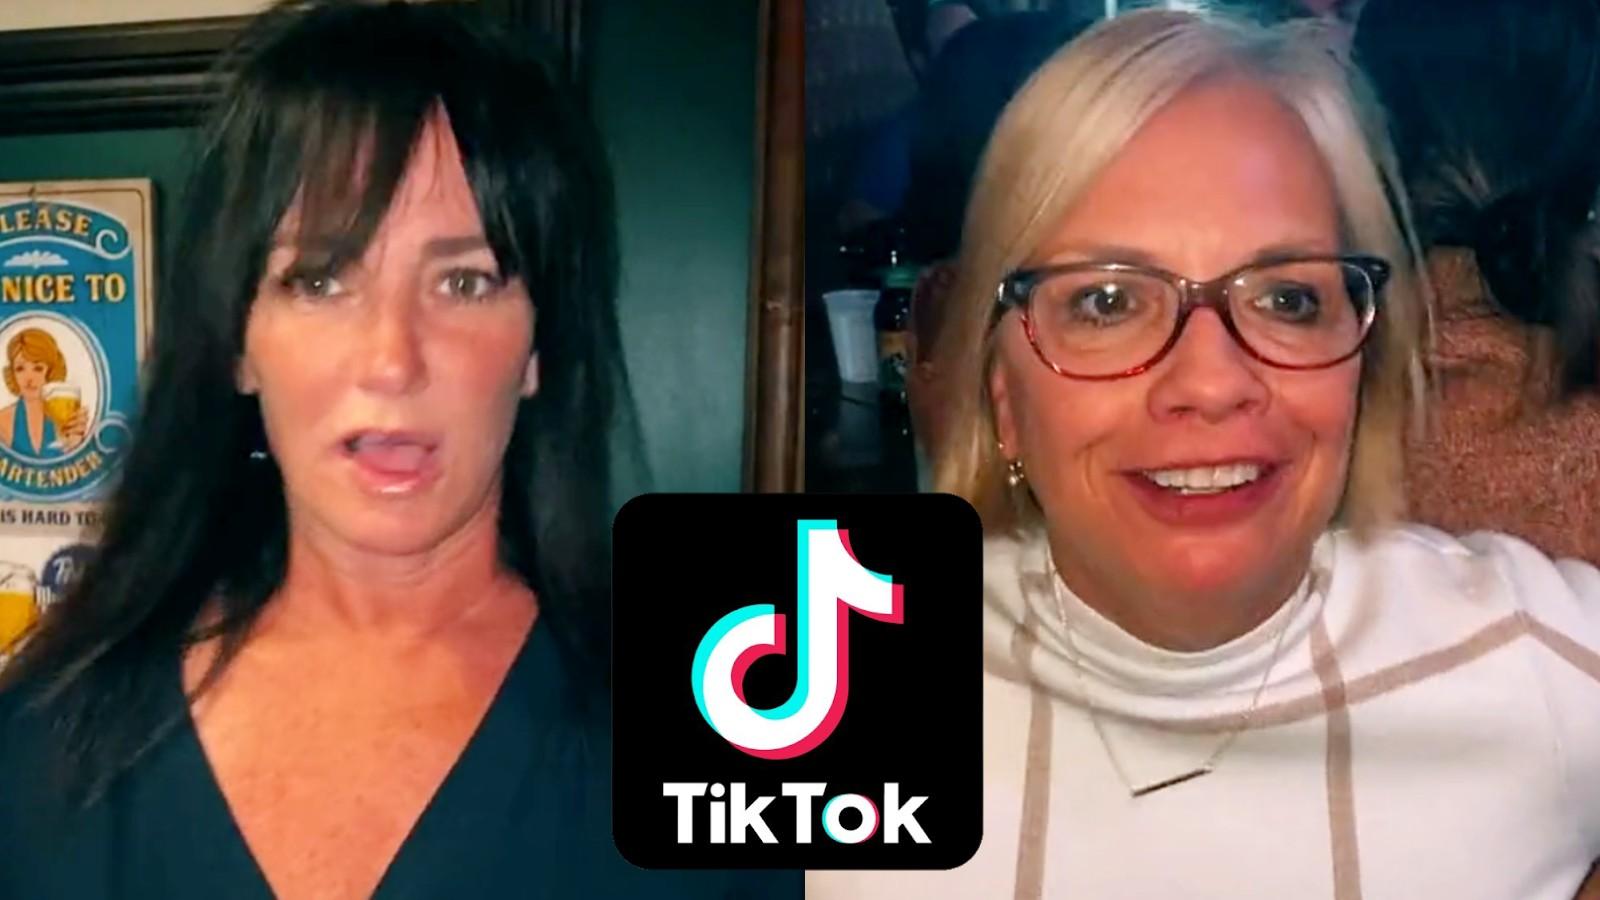 Lip Syncing TikTok moms with the TikTok logo